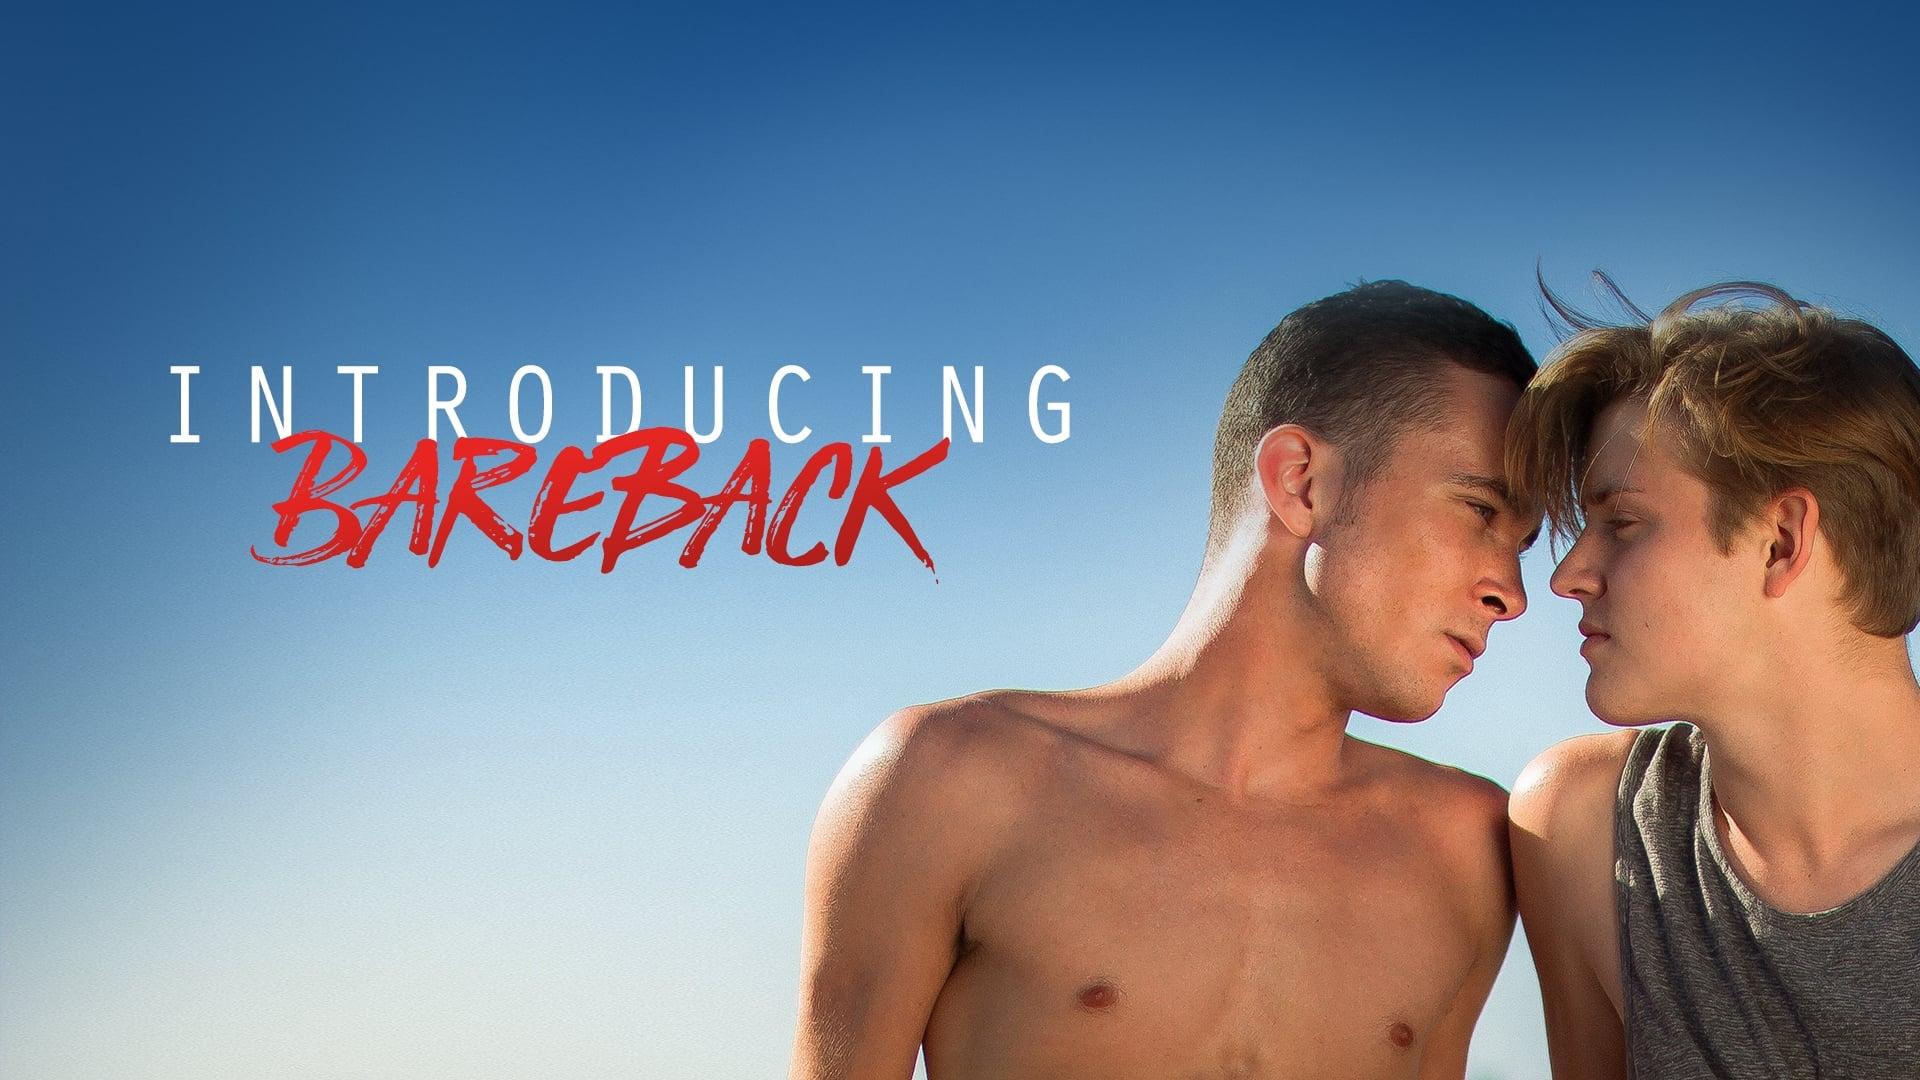 Introducing Bareback backdrop